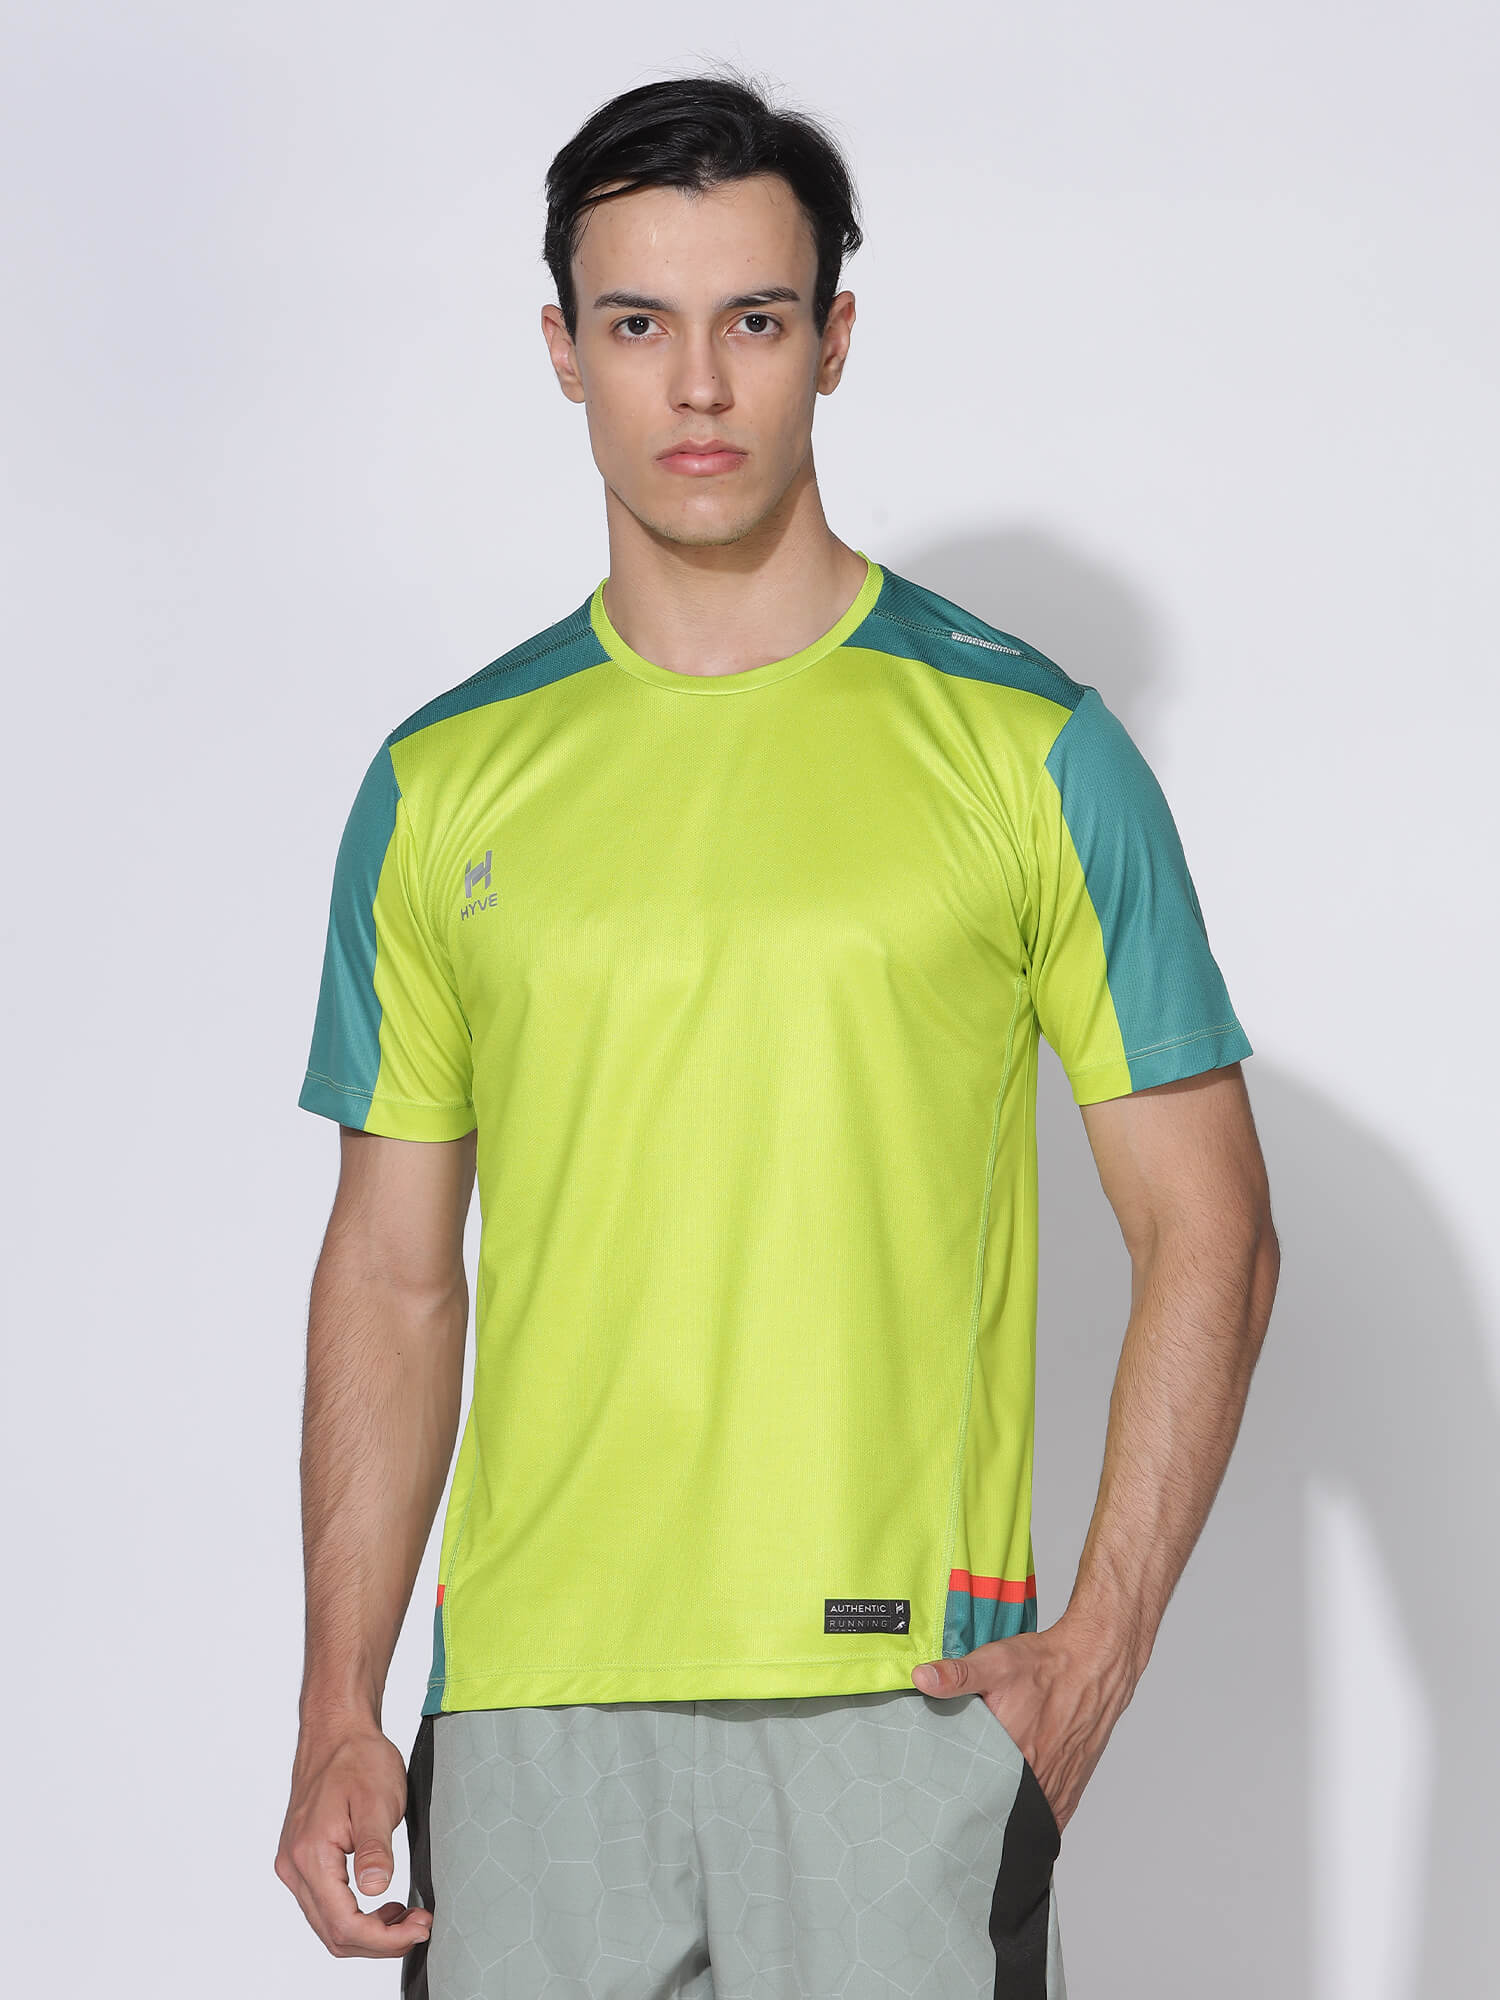 Hyve Running Jersey & T-Shirt, Jogging Tshirts